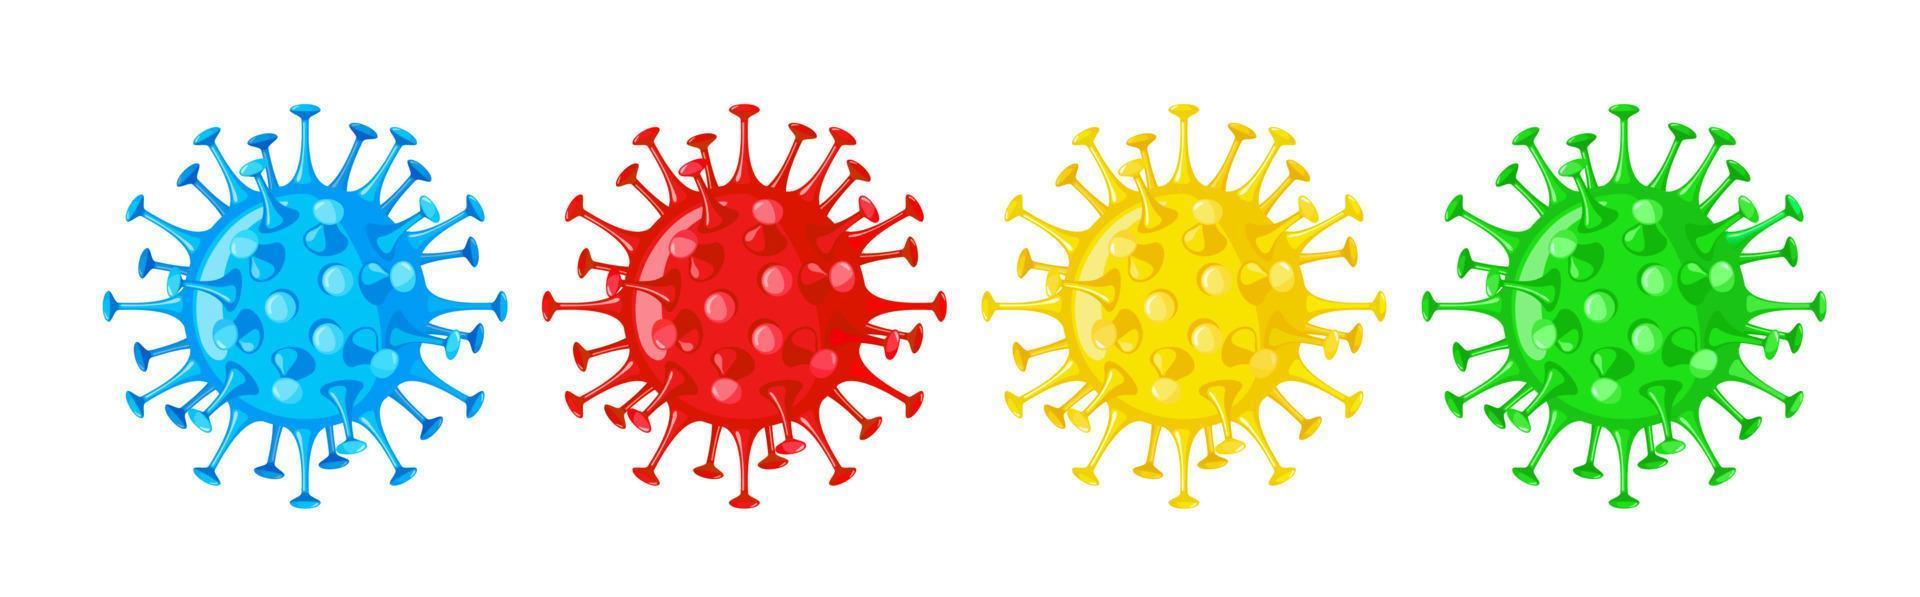 conjunto de ícones de bactérias coronavírus multicoloridas em estilo simples, isolado no fundo branco. 2019-ncov conceito. ilustração vetorial. vetor